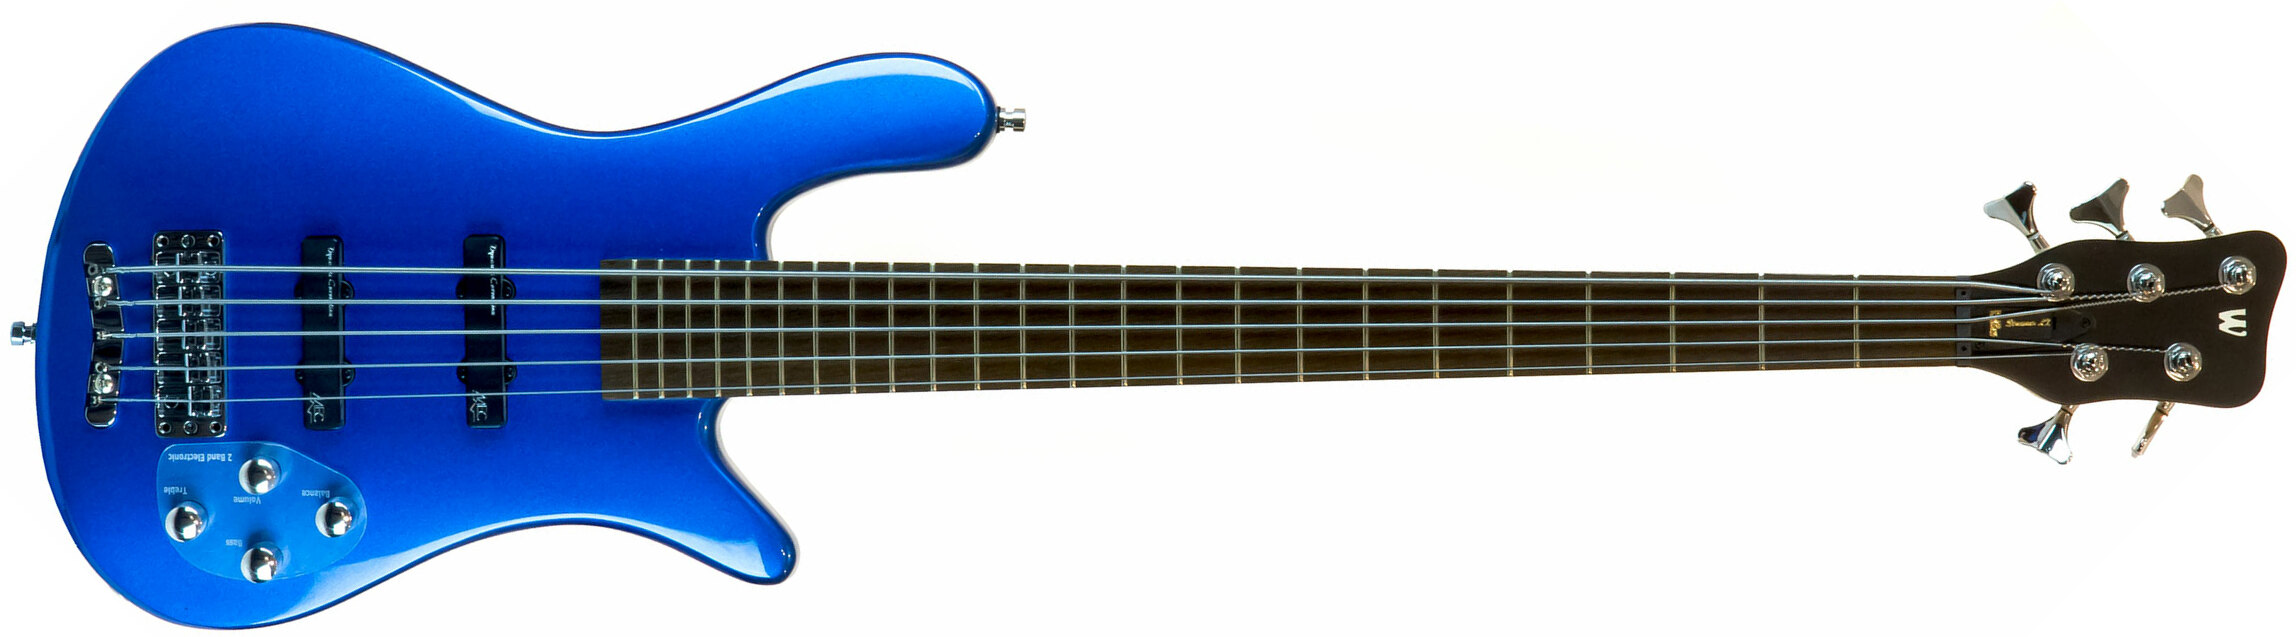 Warwick Streamer Lx 5 String Rockbass 5-cordes Active Wen +housse - Blue Metallic - Basse Électrique Solid Body - Main picture